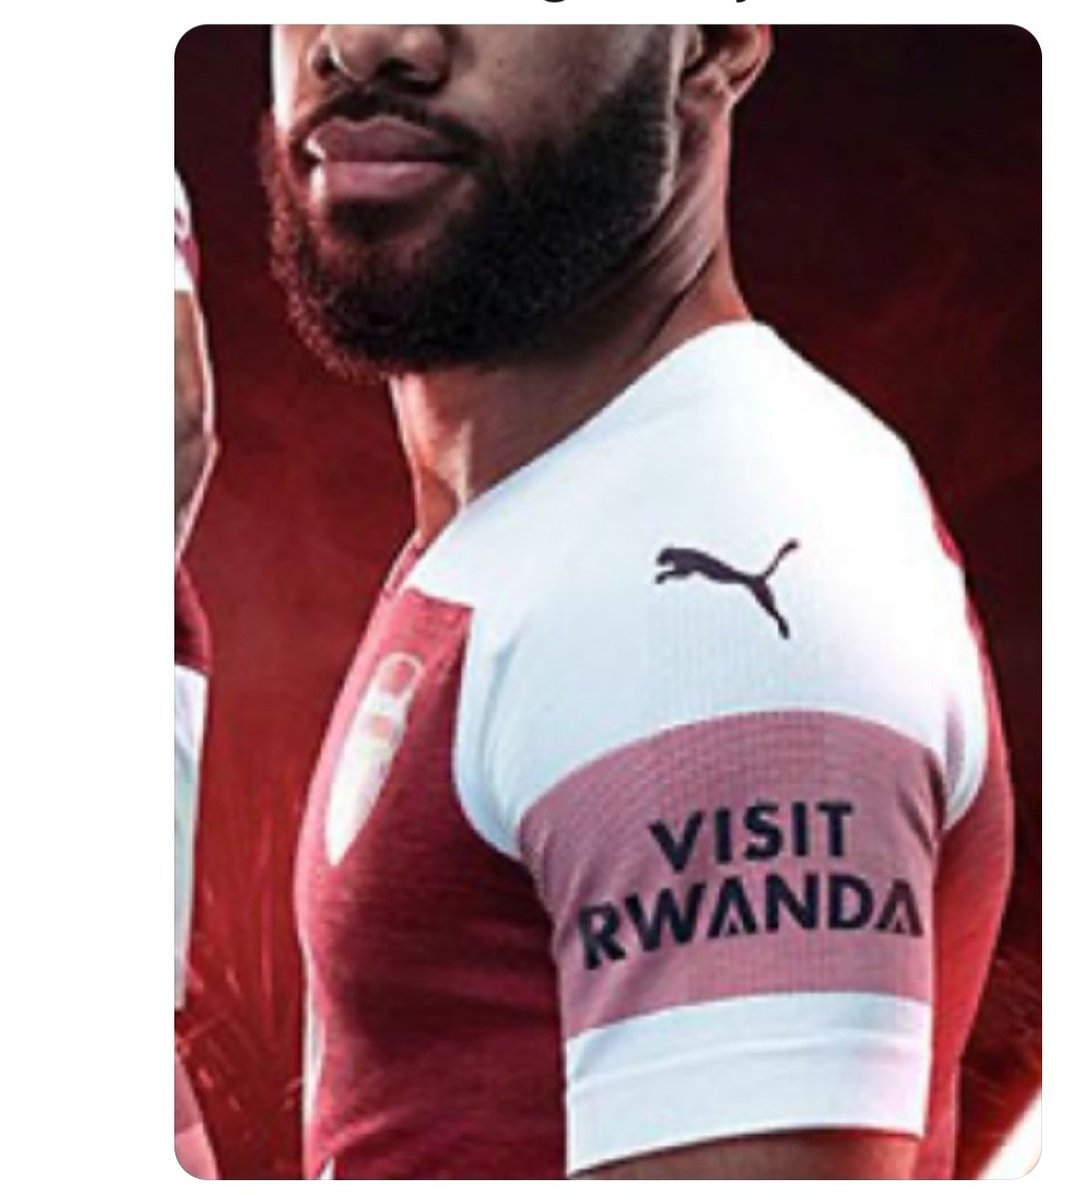 @IanCockerill2 Visit Rwanda its a tourist destination..Arsenal sponsors